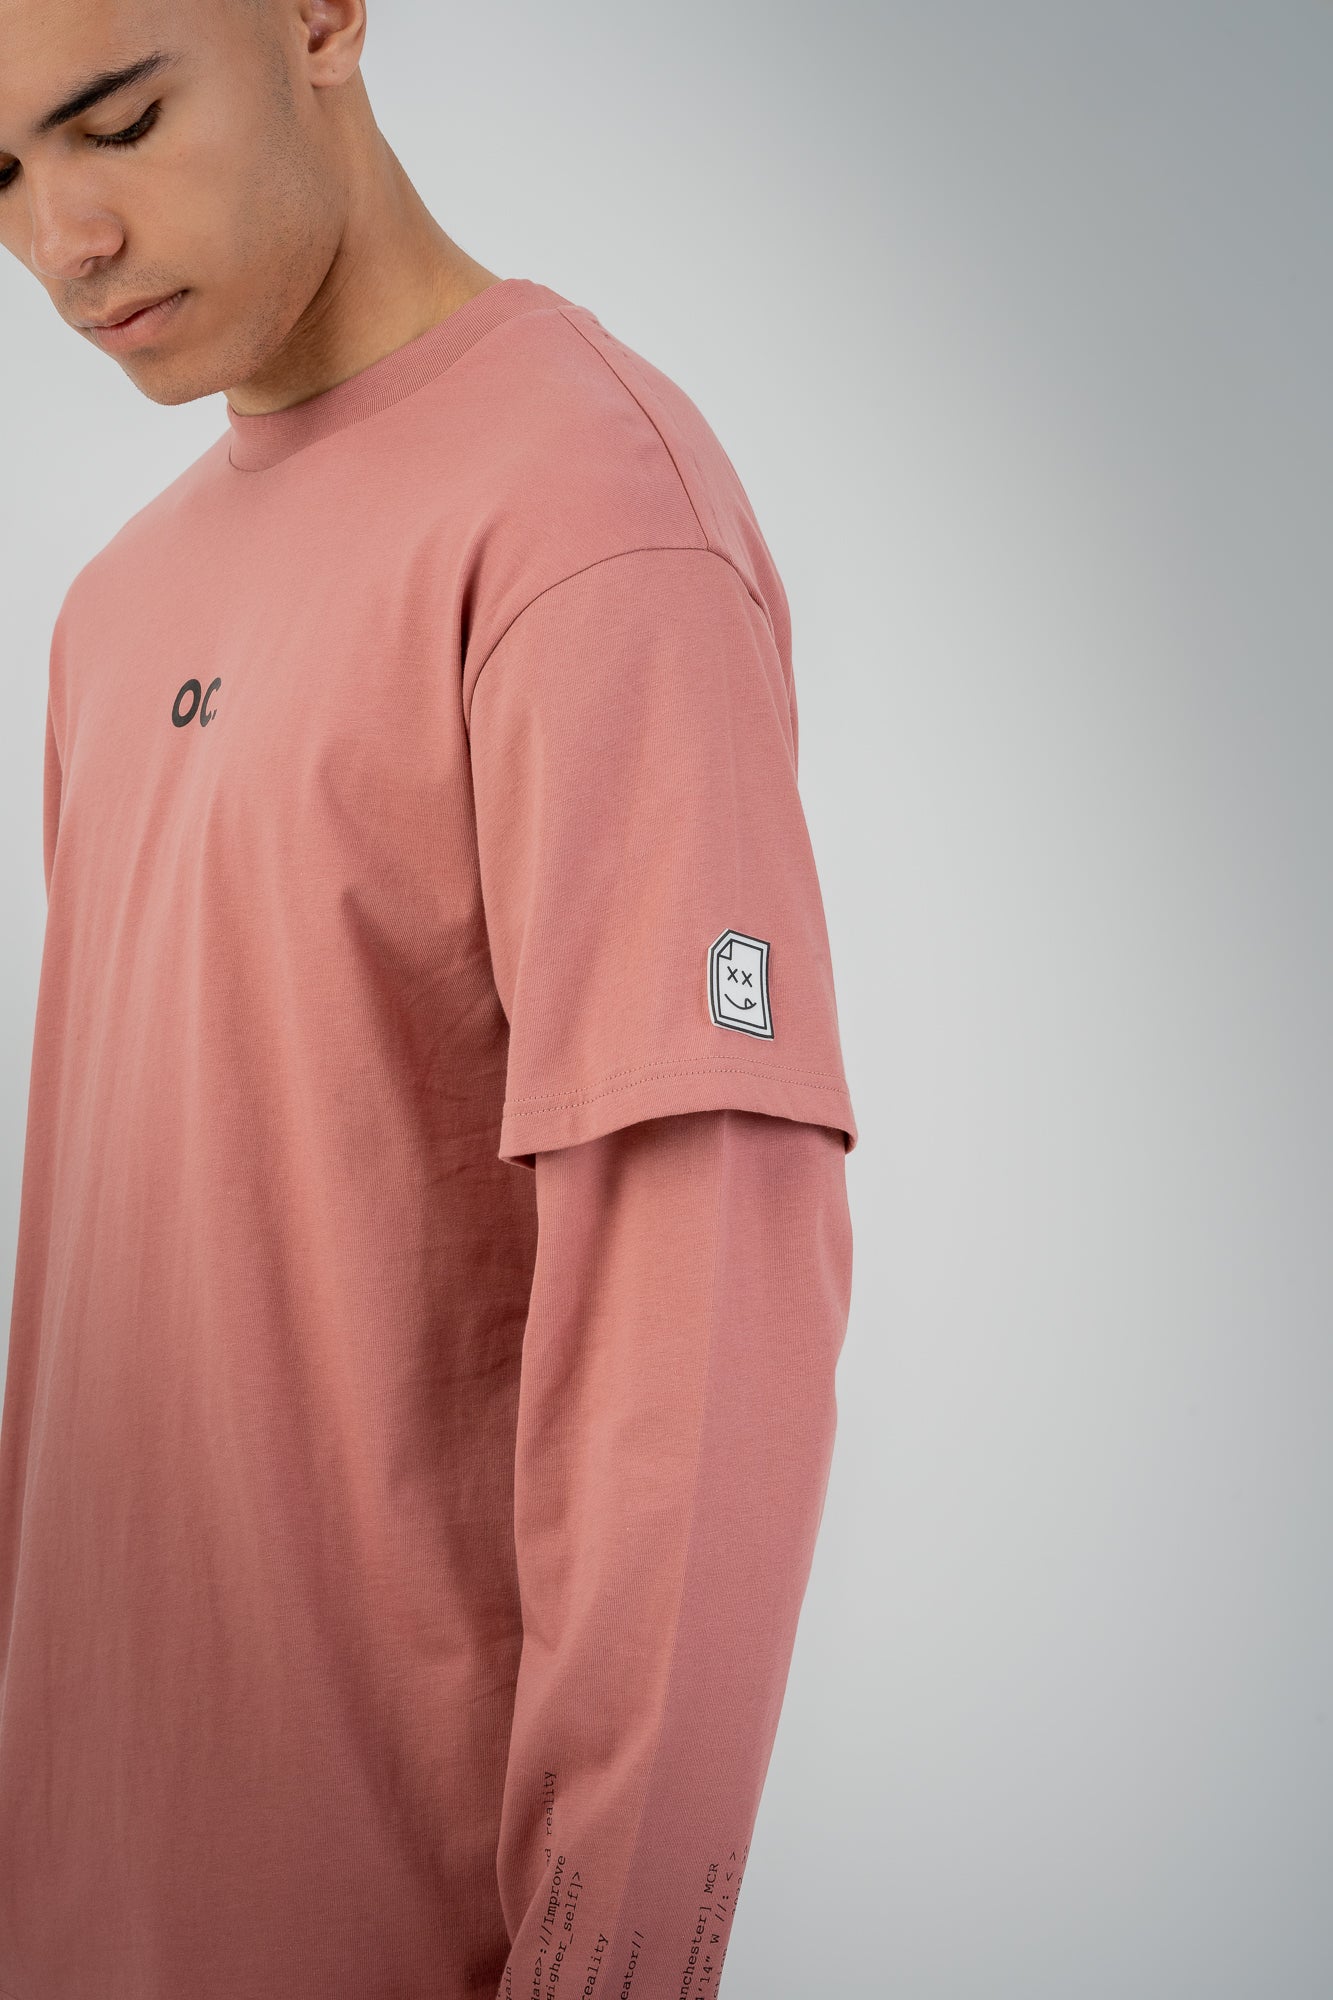 OC. Layered Sleeve T-Shirt - Dusky Pink